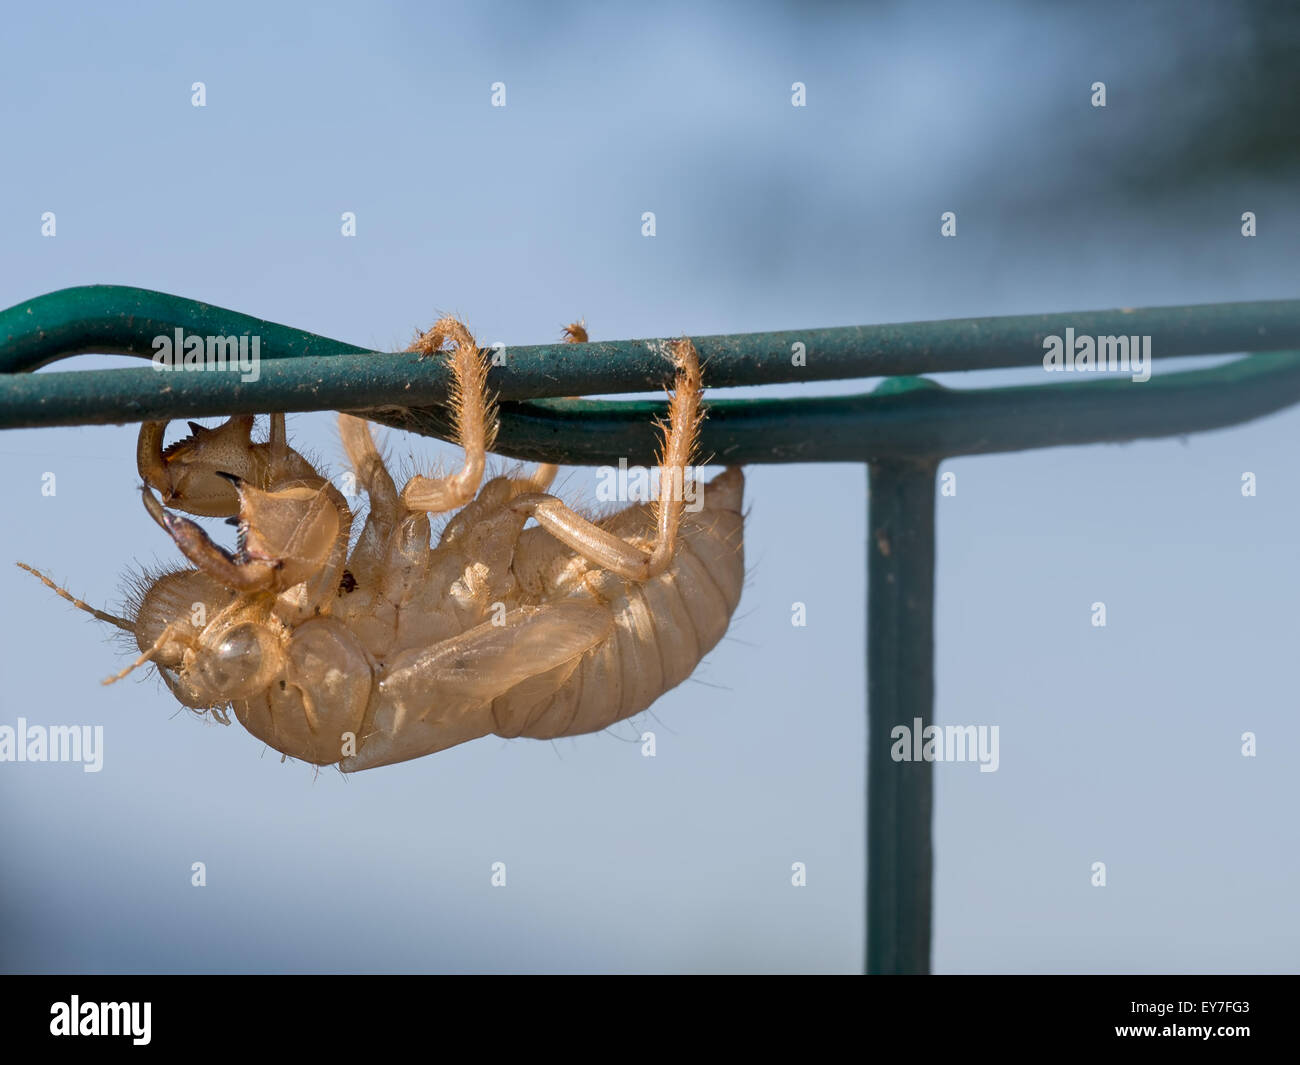 Amazing nature. Unknown insect exoskeleton on fence. Stock Photo